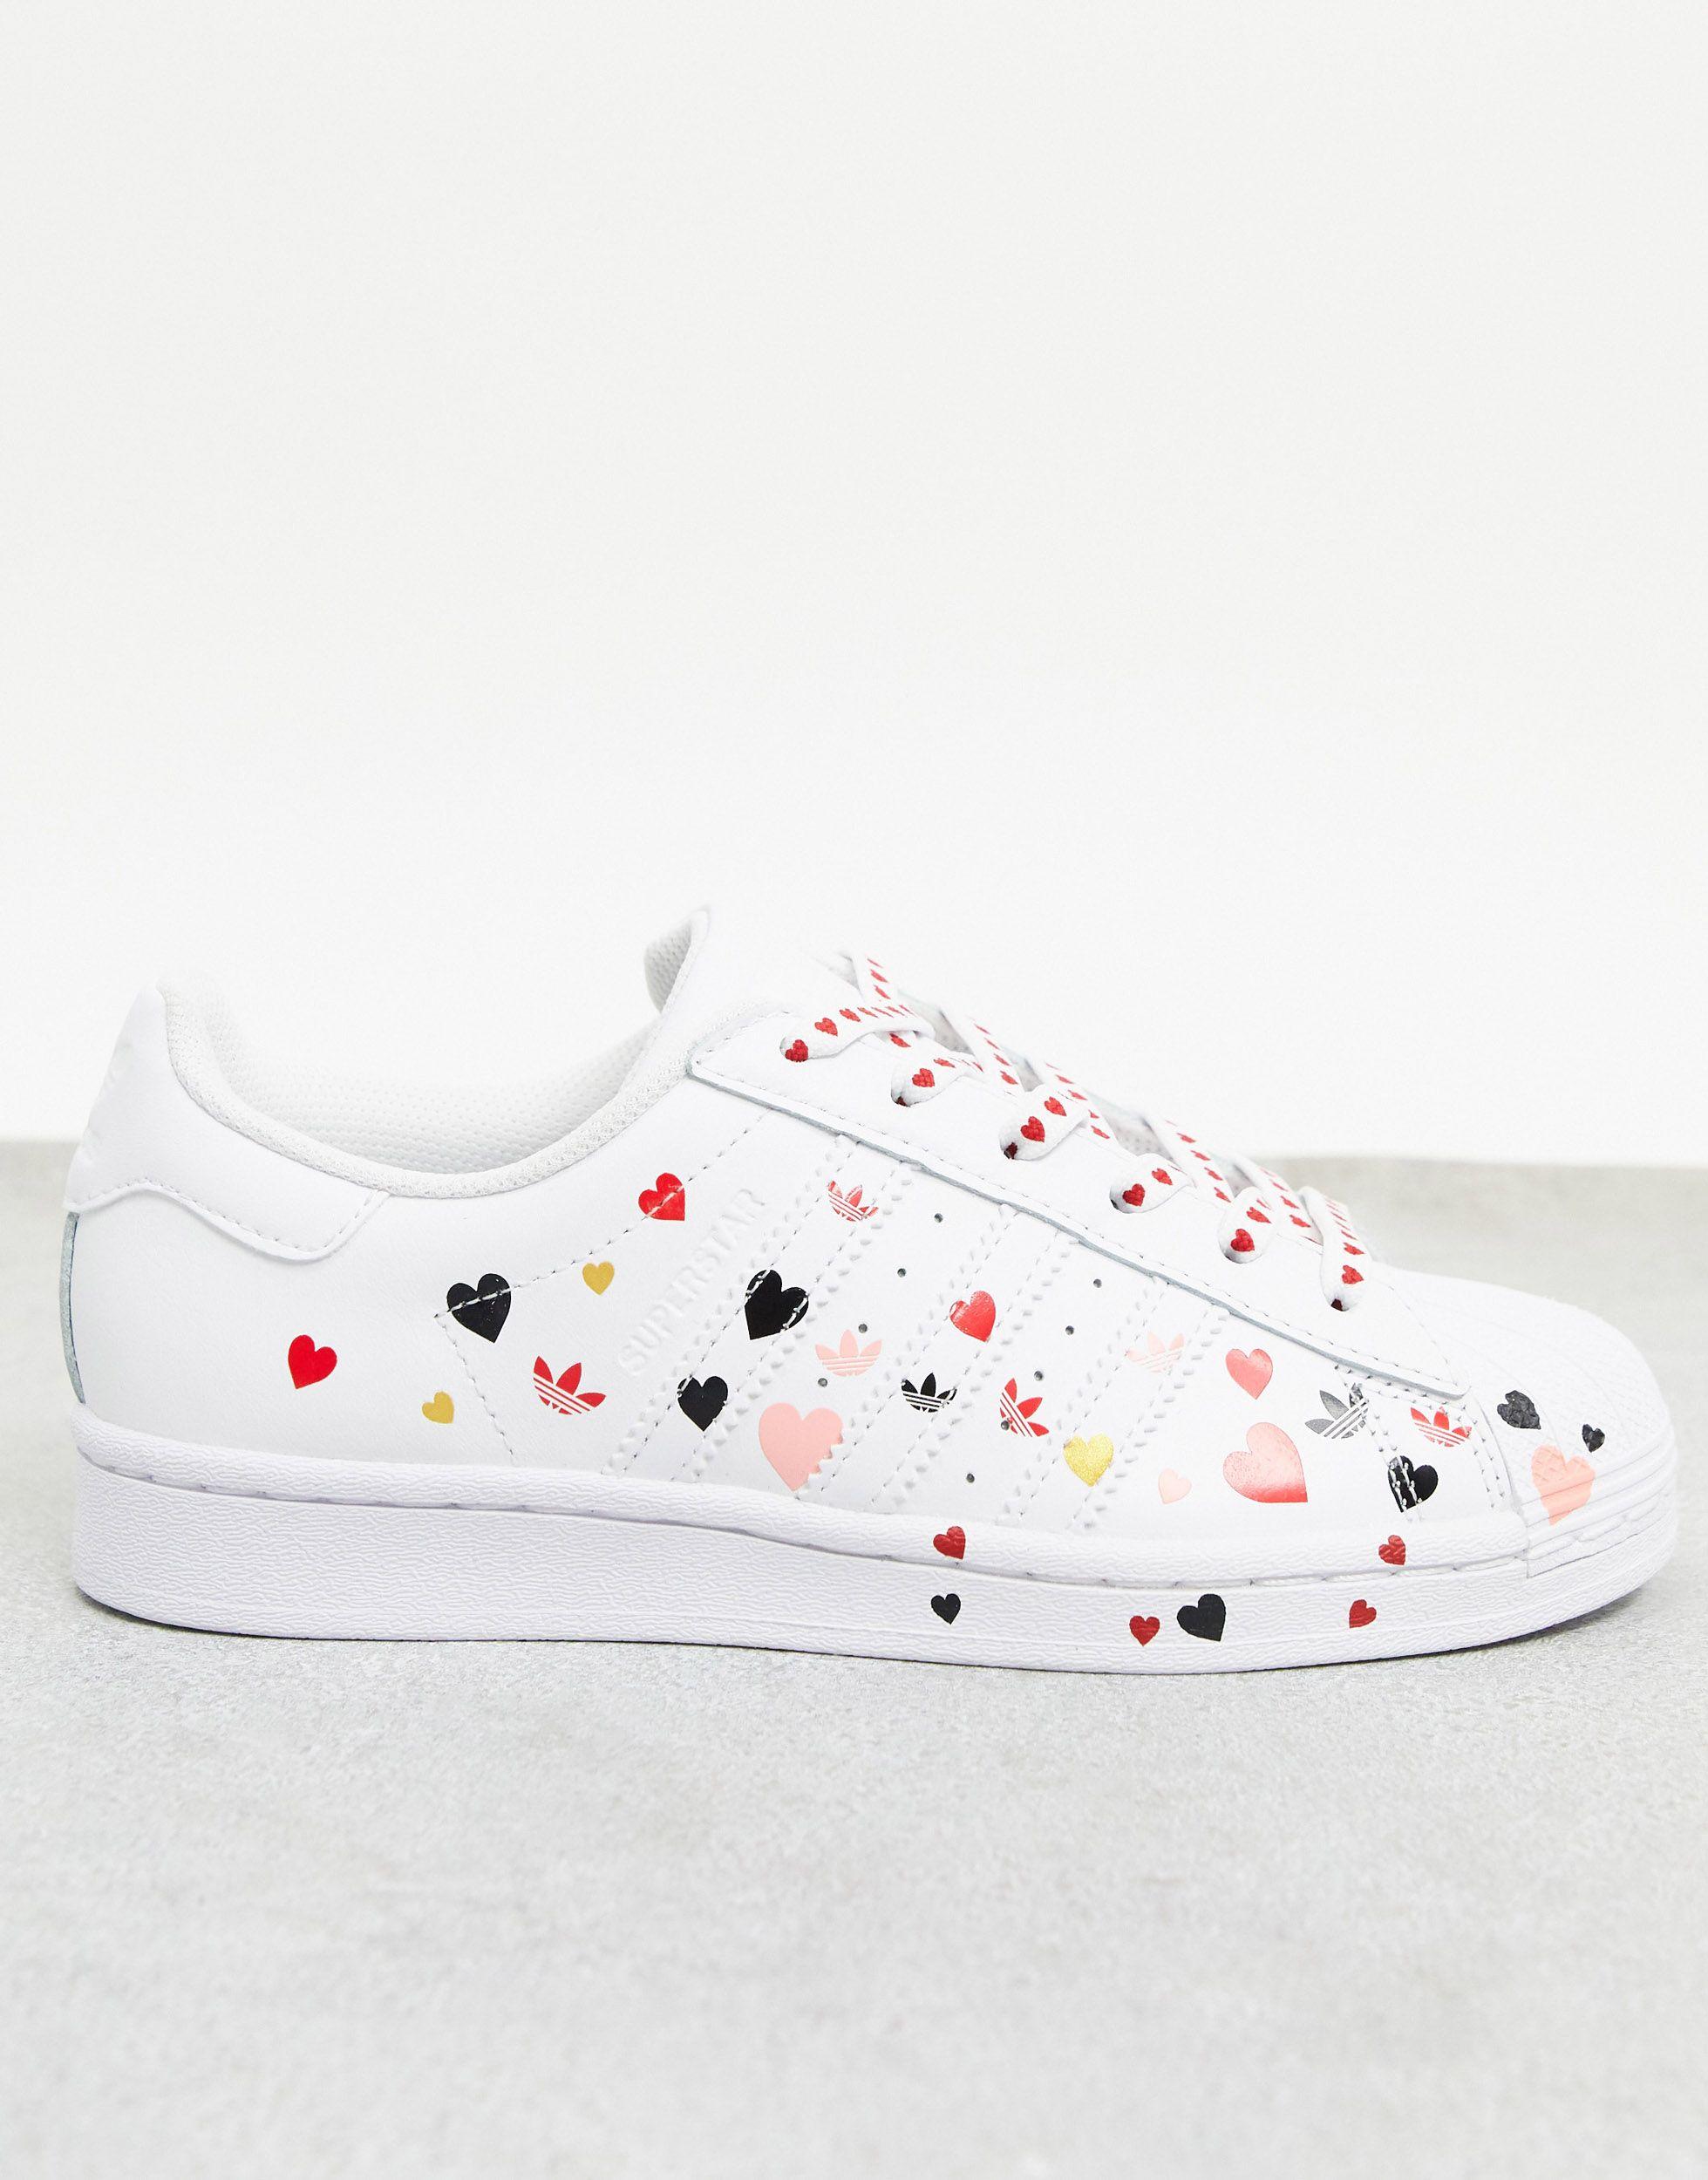 Simplicity Conjugate appease adidas Originals – Superstar – e Sneaker mit Herz-Muster in Weiß | Lyst DE